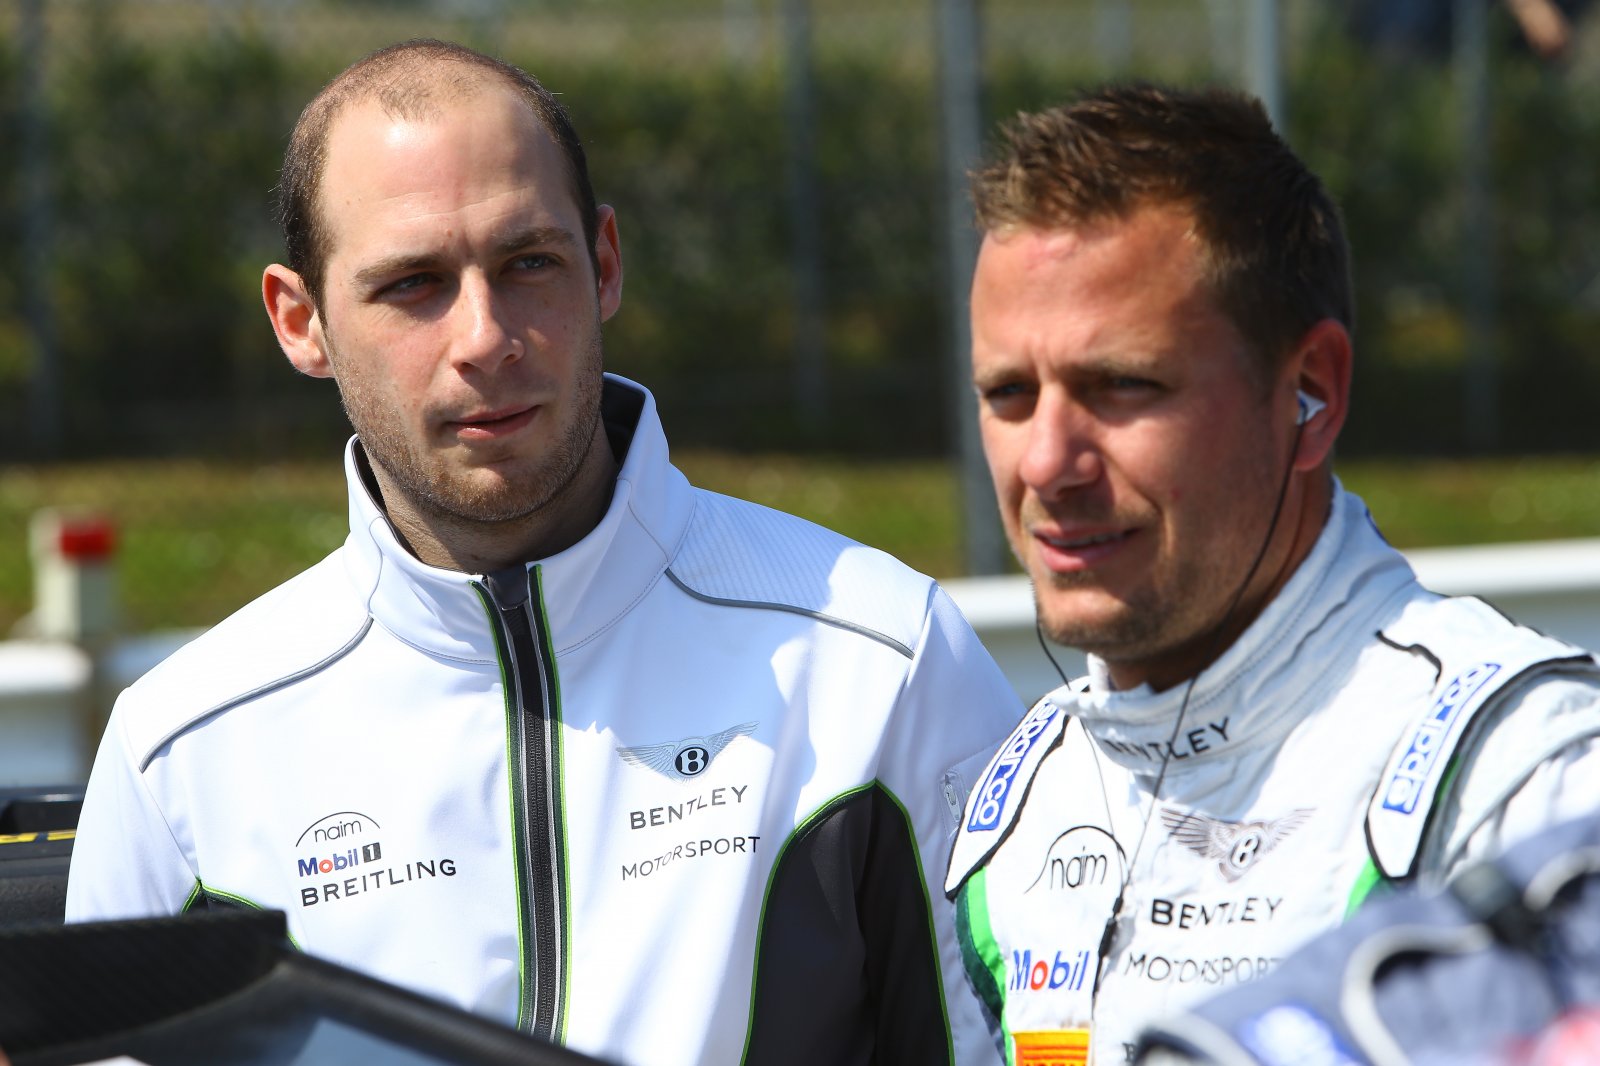 Reigning champ Reip starts Bentley chapter in Monza